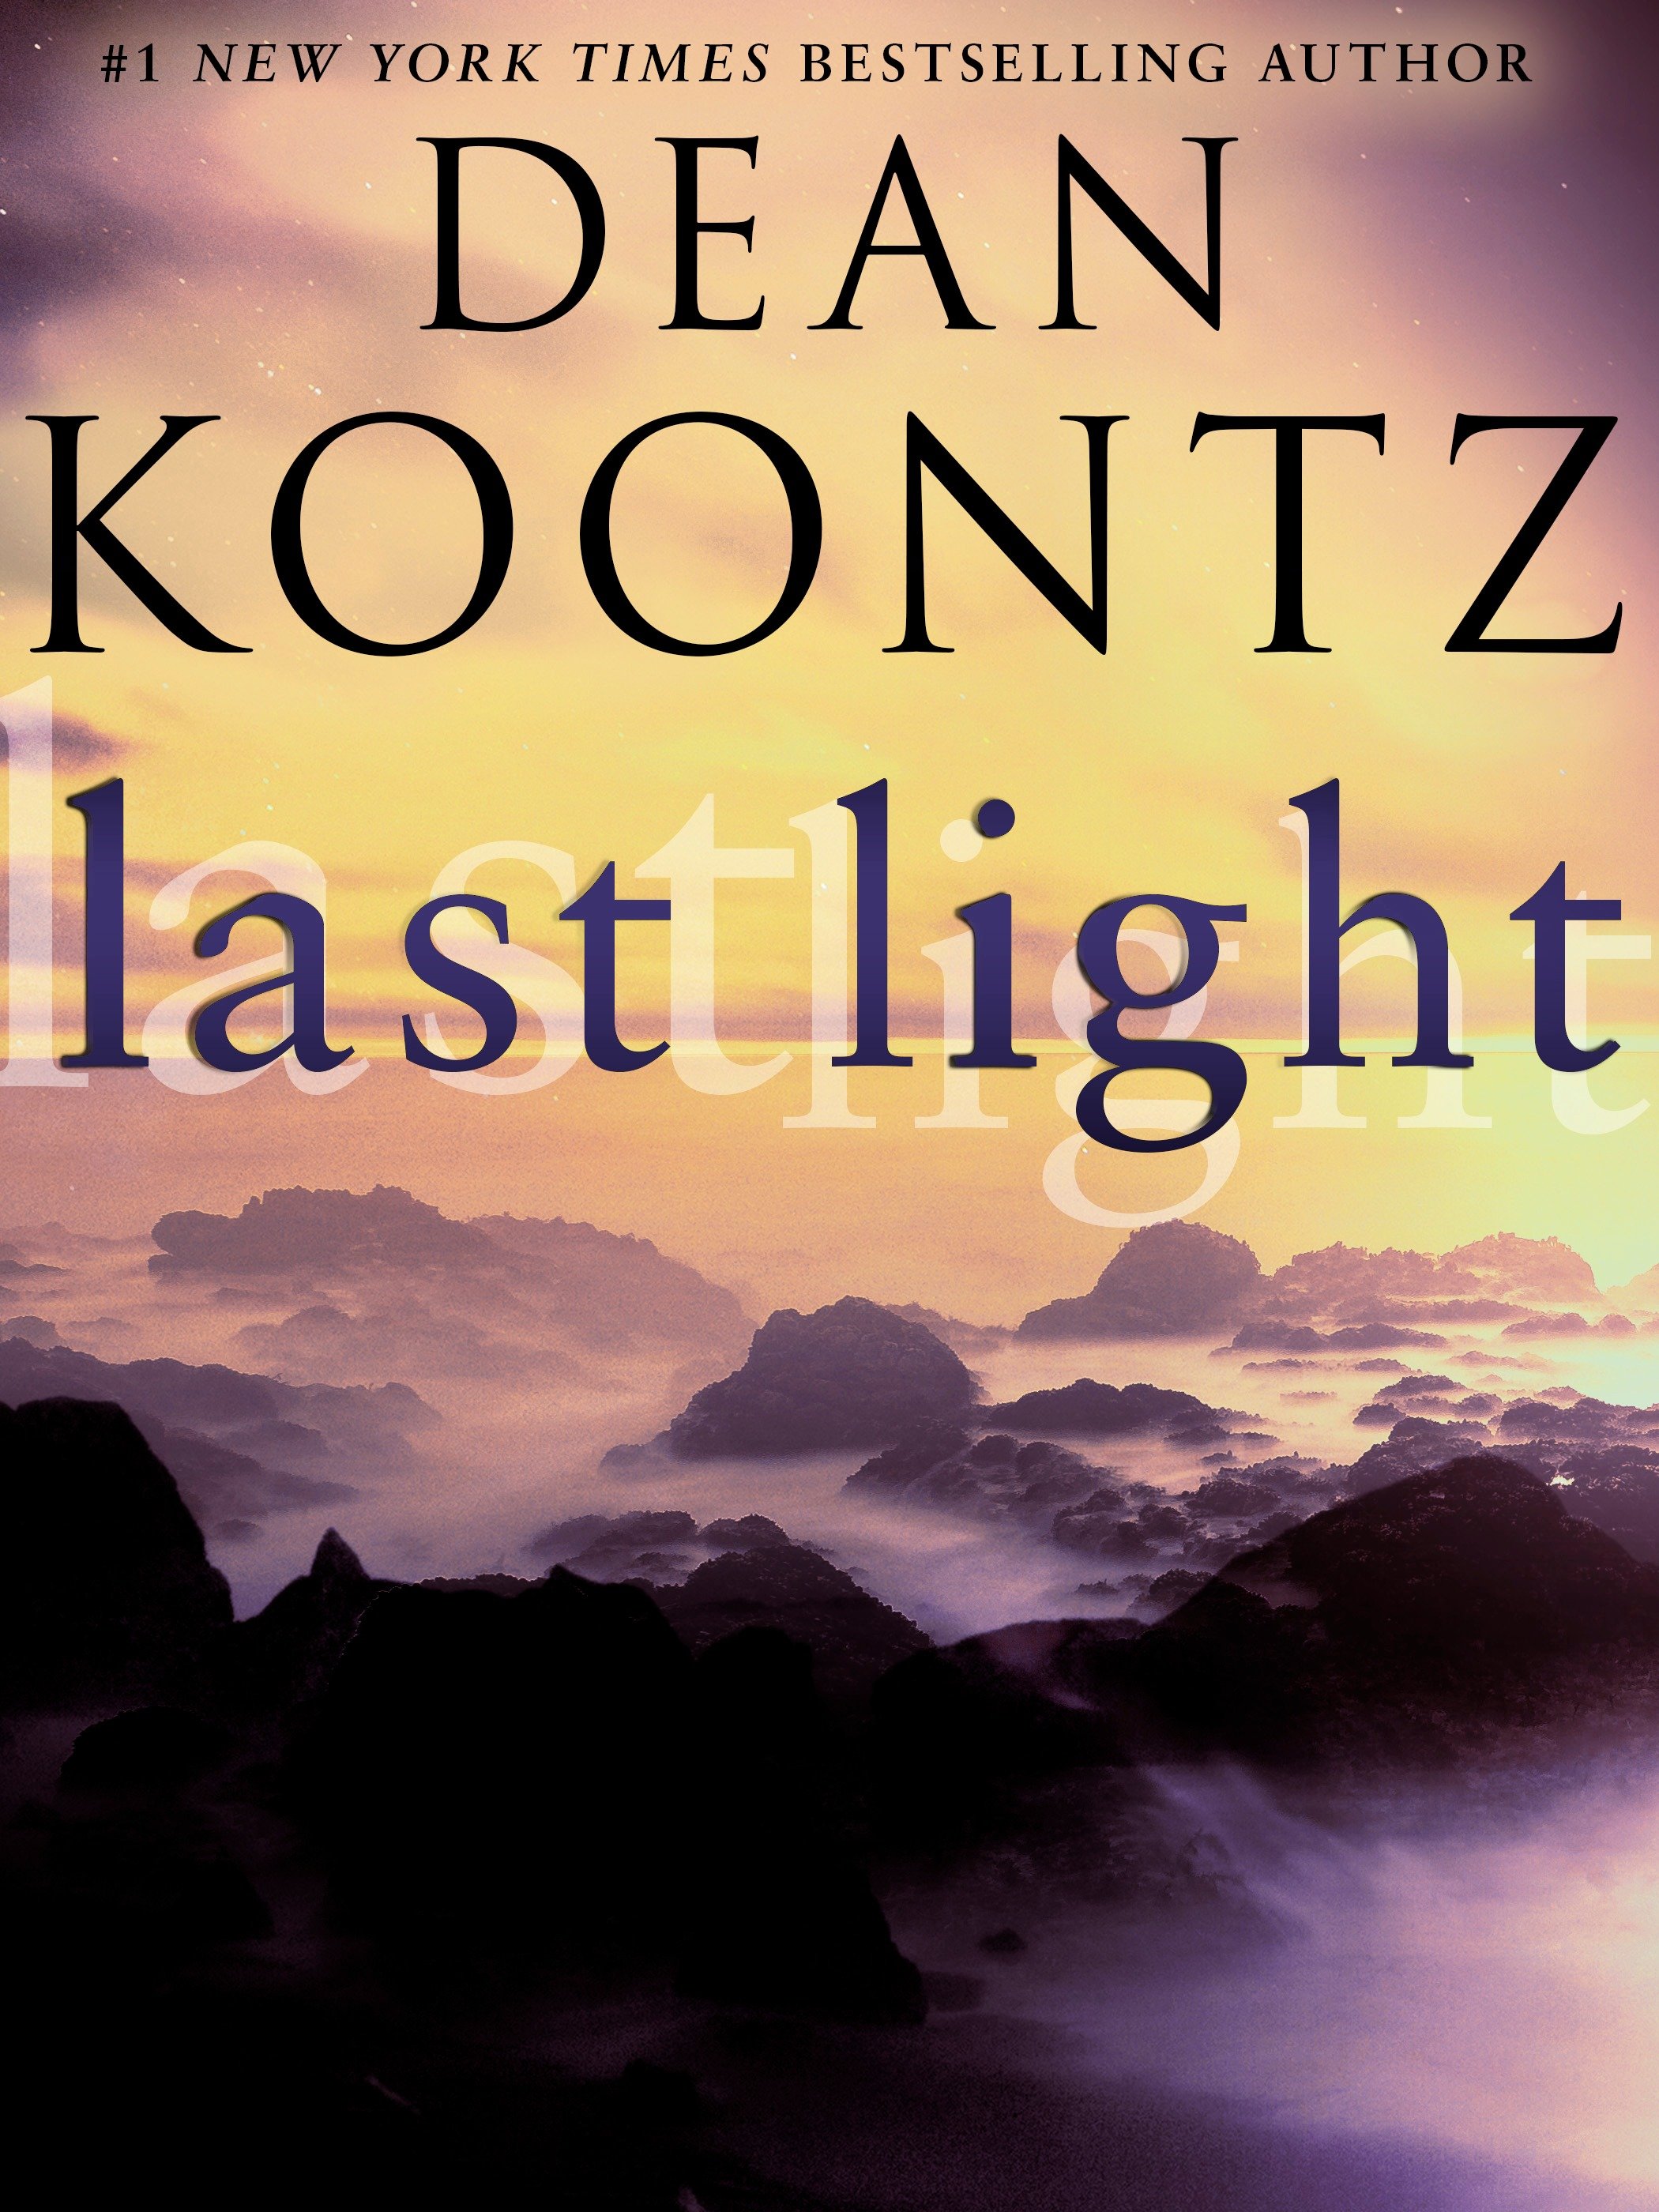 Last light cover image